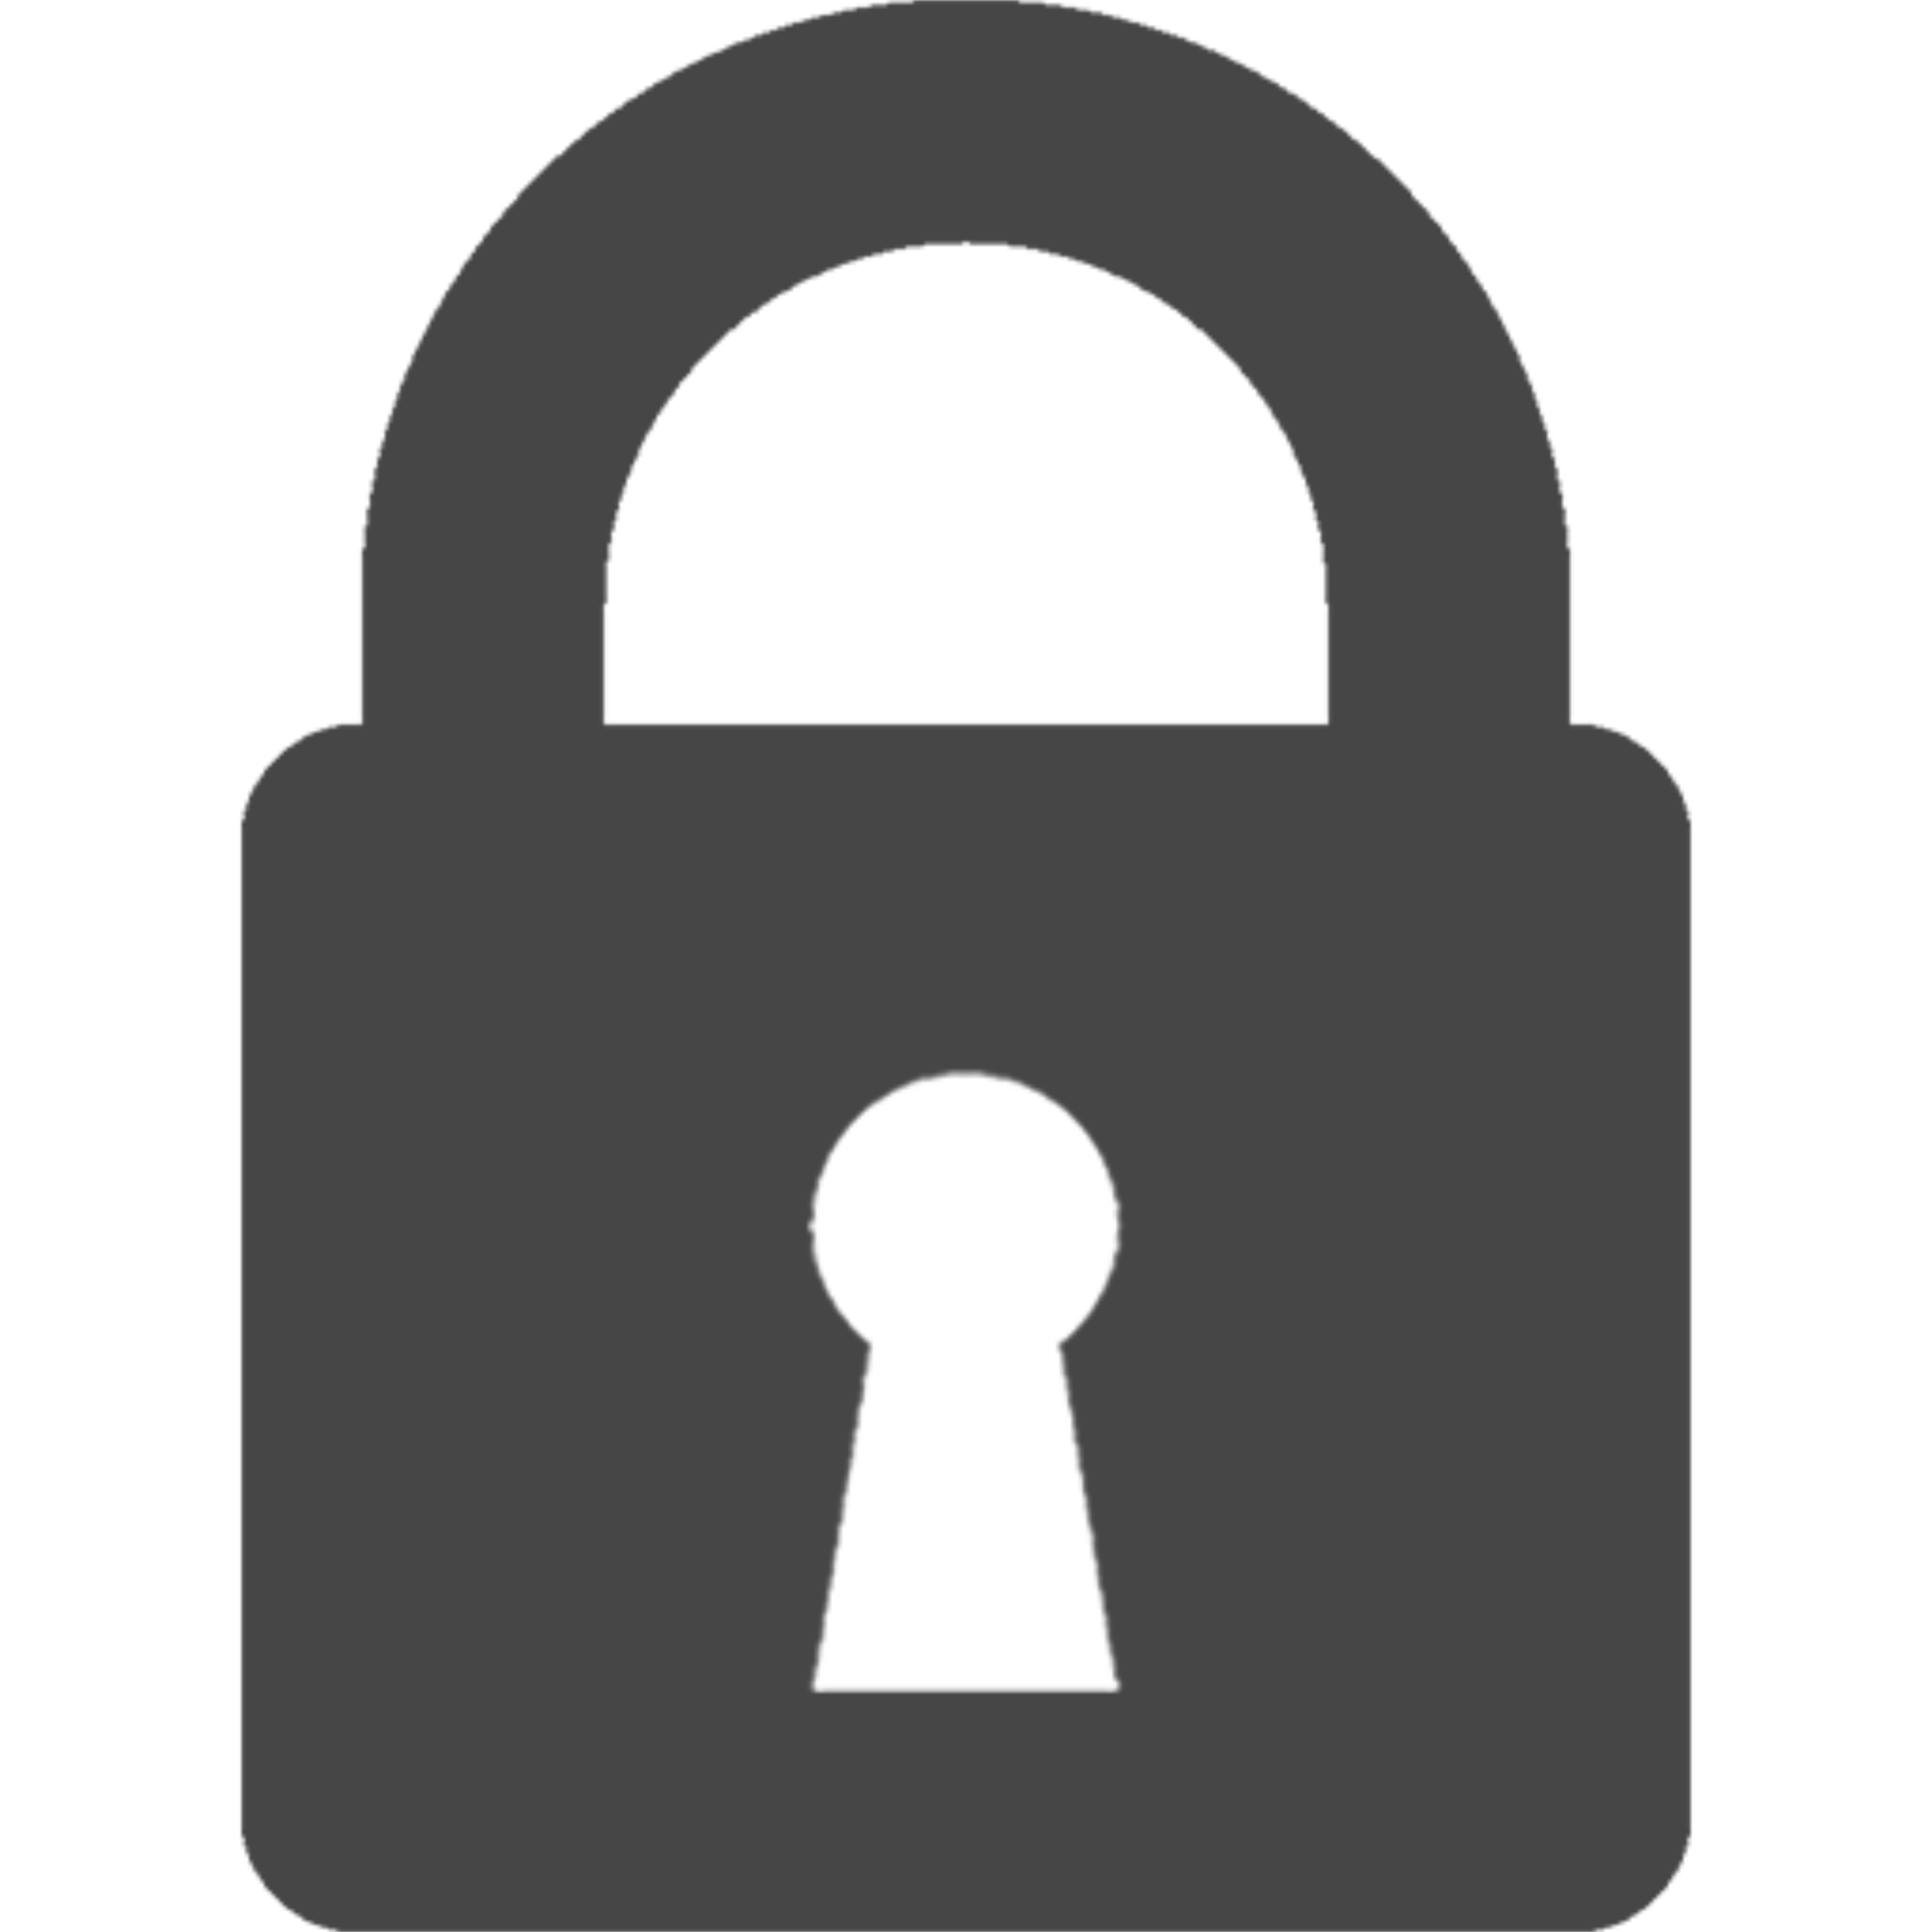 Padlock or lock icon